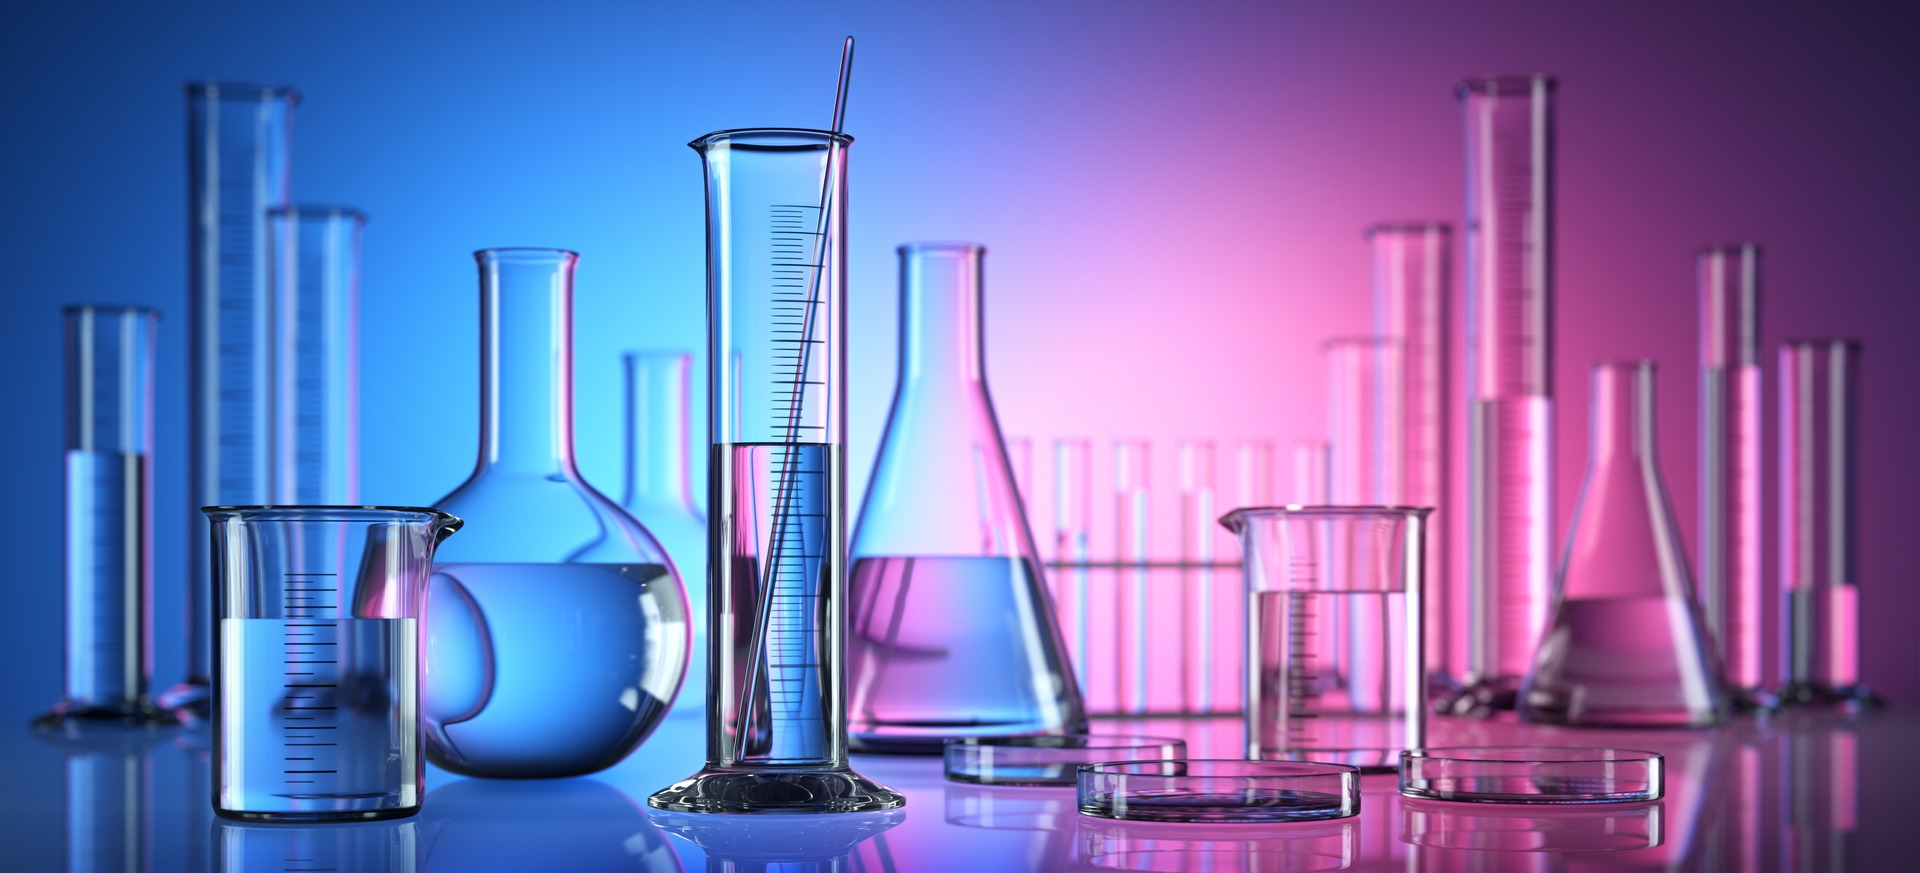 Chemistry Laboratory Motive Blue Magenta